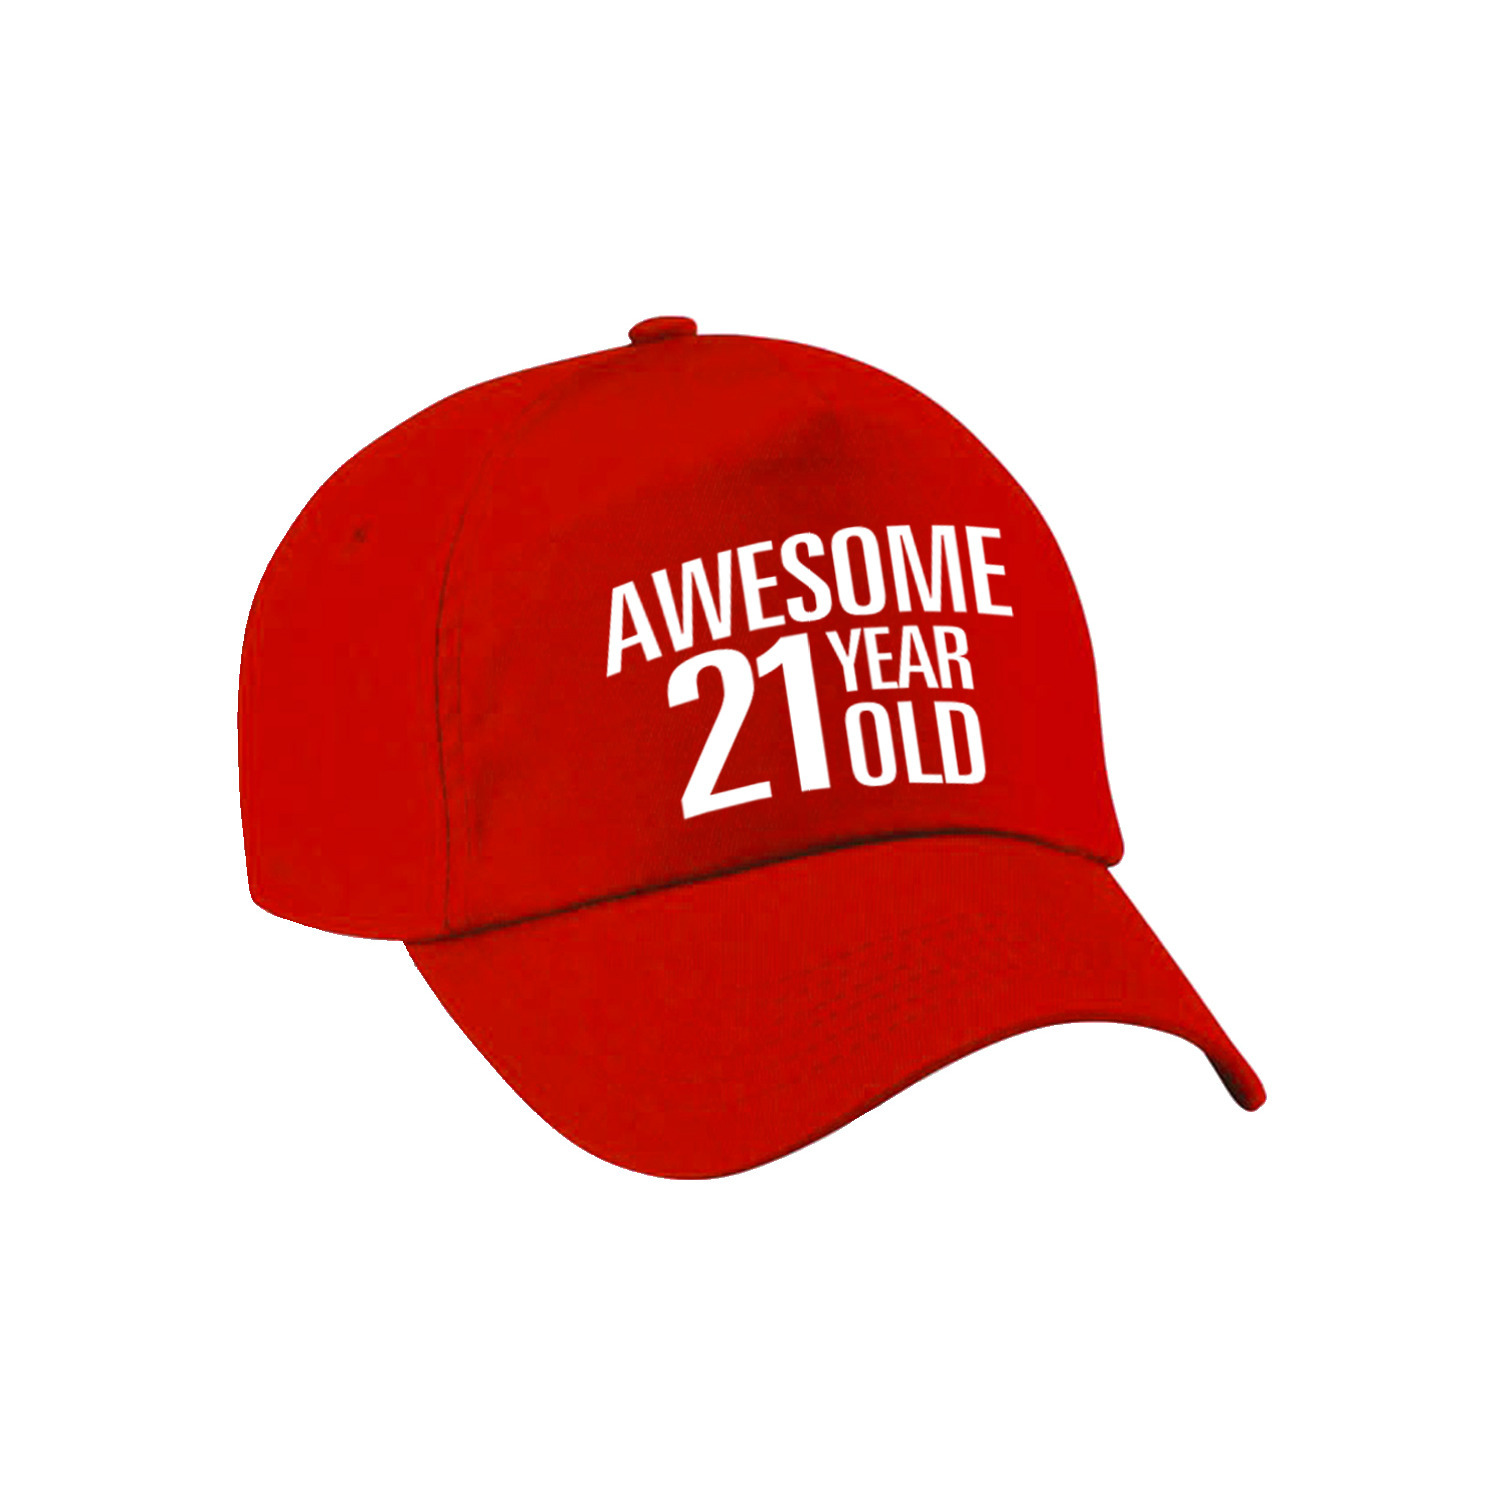 Awesome 21 year old verjaardag pet / cap rood voor dames en heren